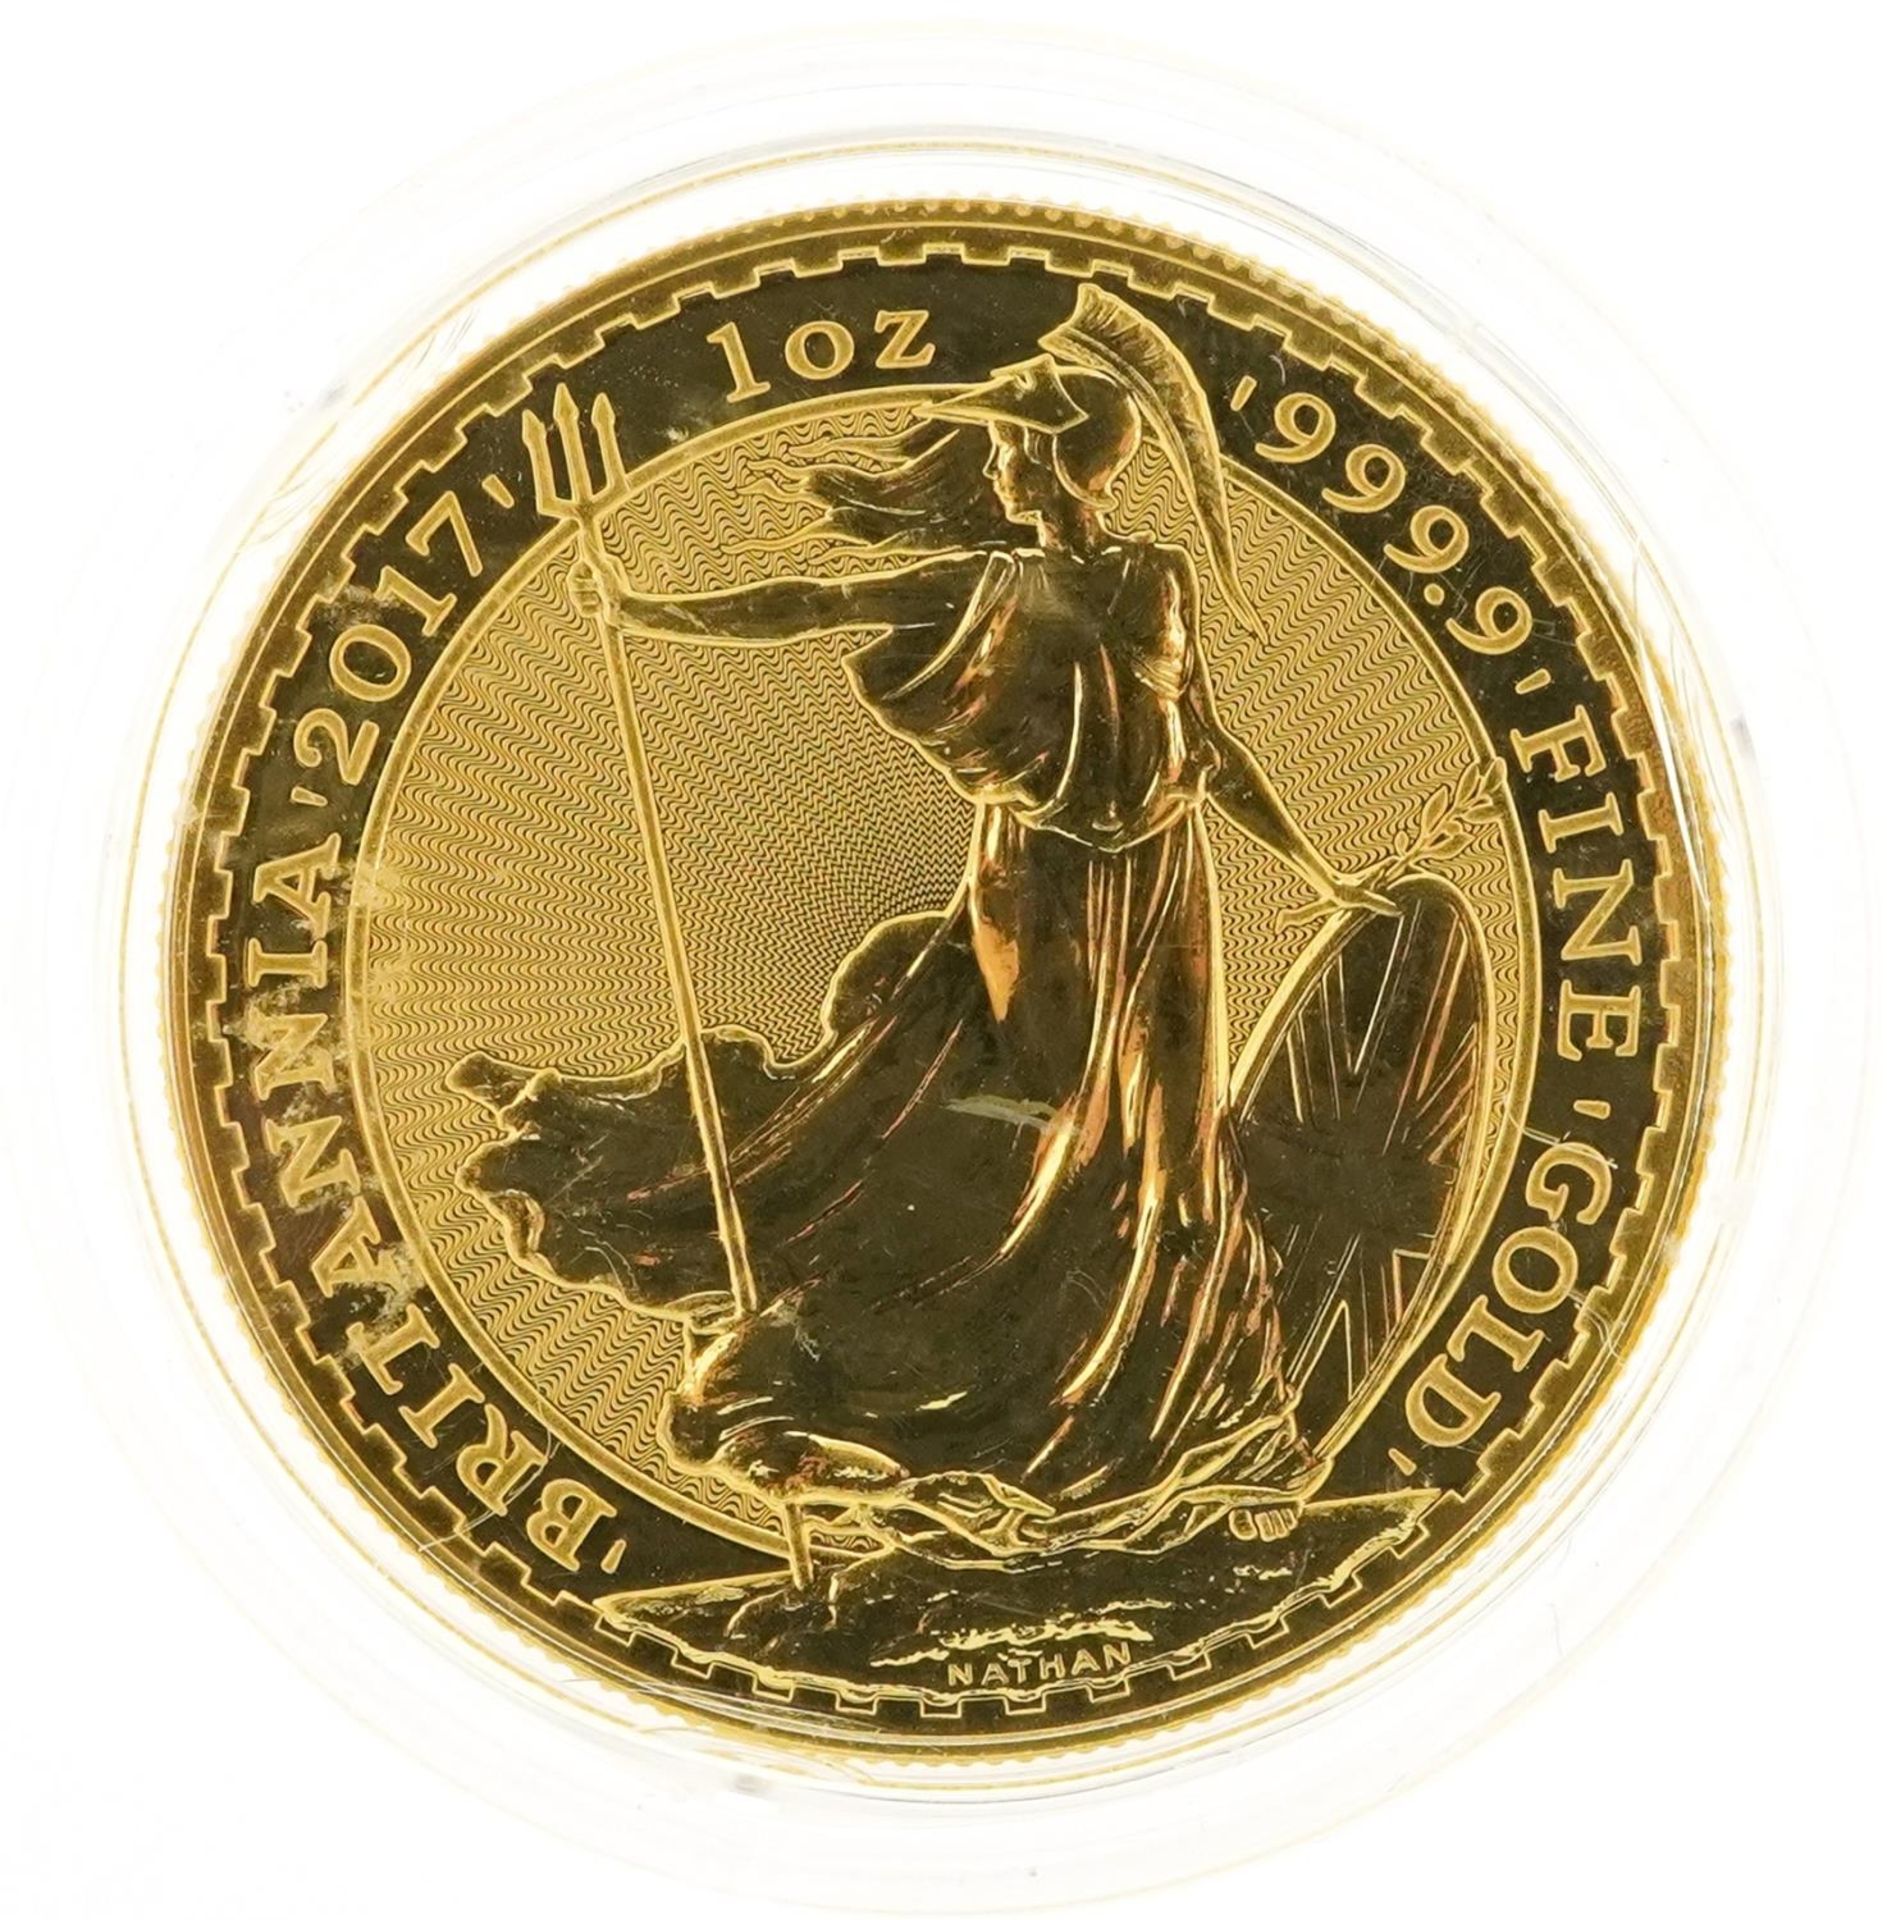 Elizabeth II 2017 Britannia one ounce fine gold one hundred pound coin